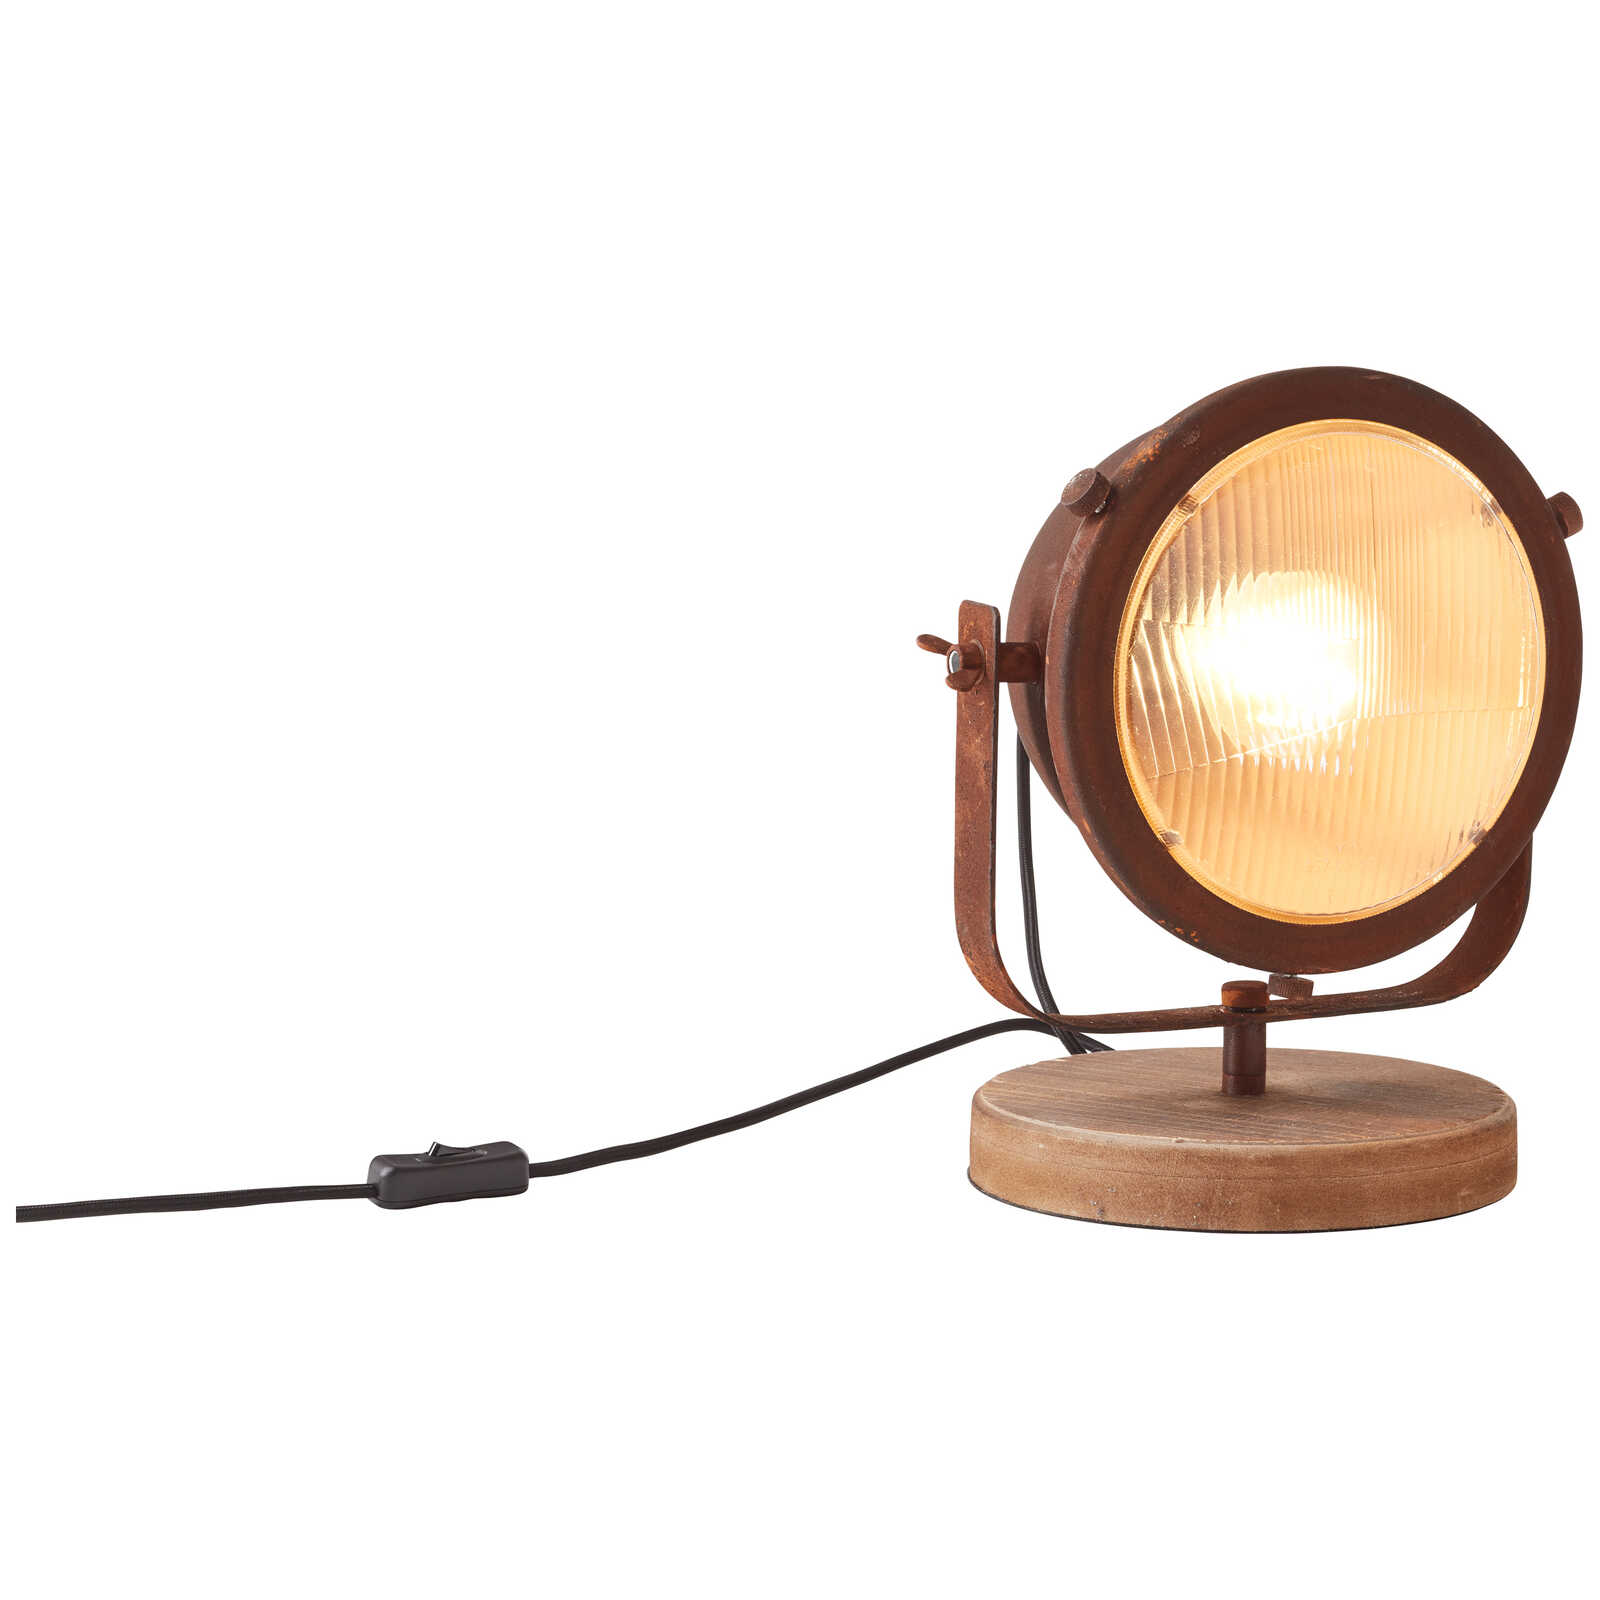             Houten tafellamp - Dilara 1 - Bruin
        